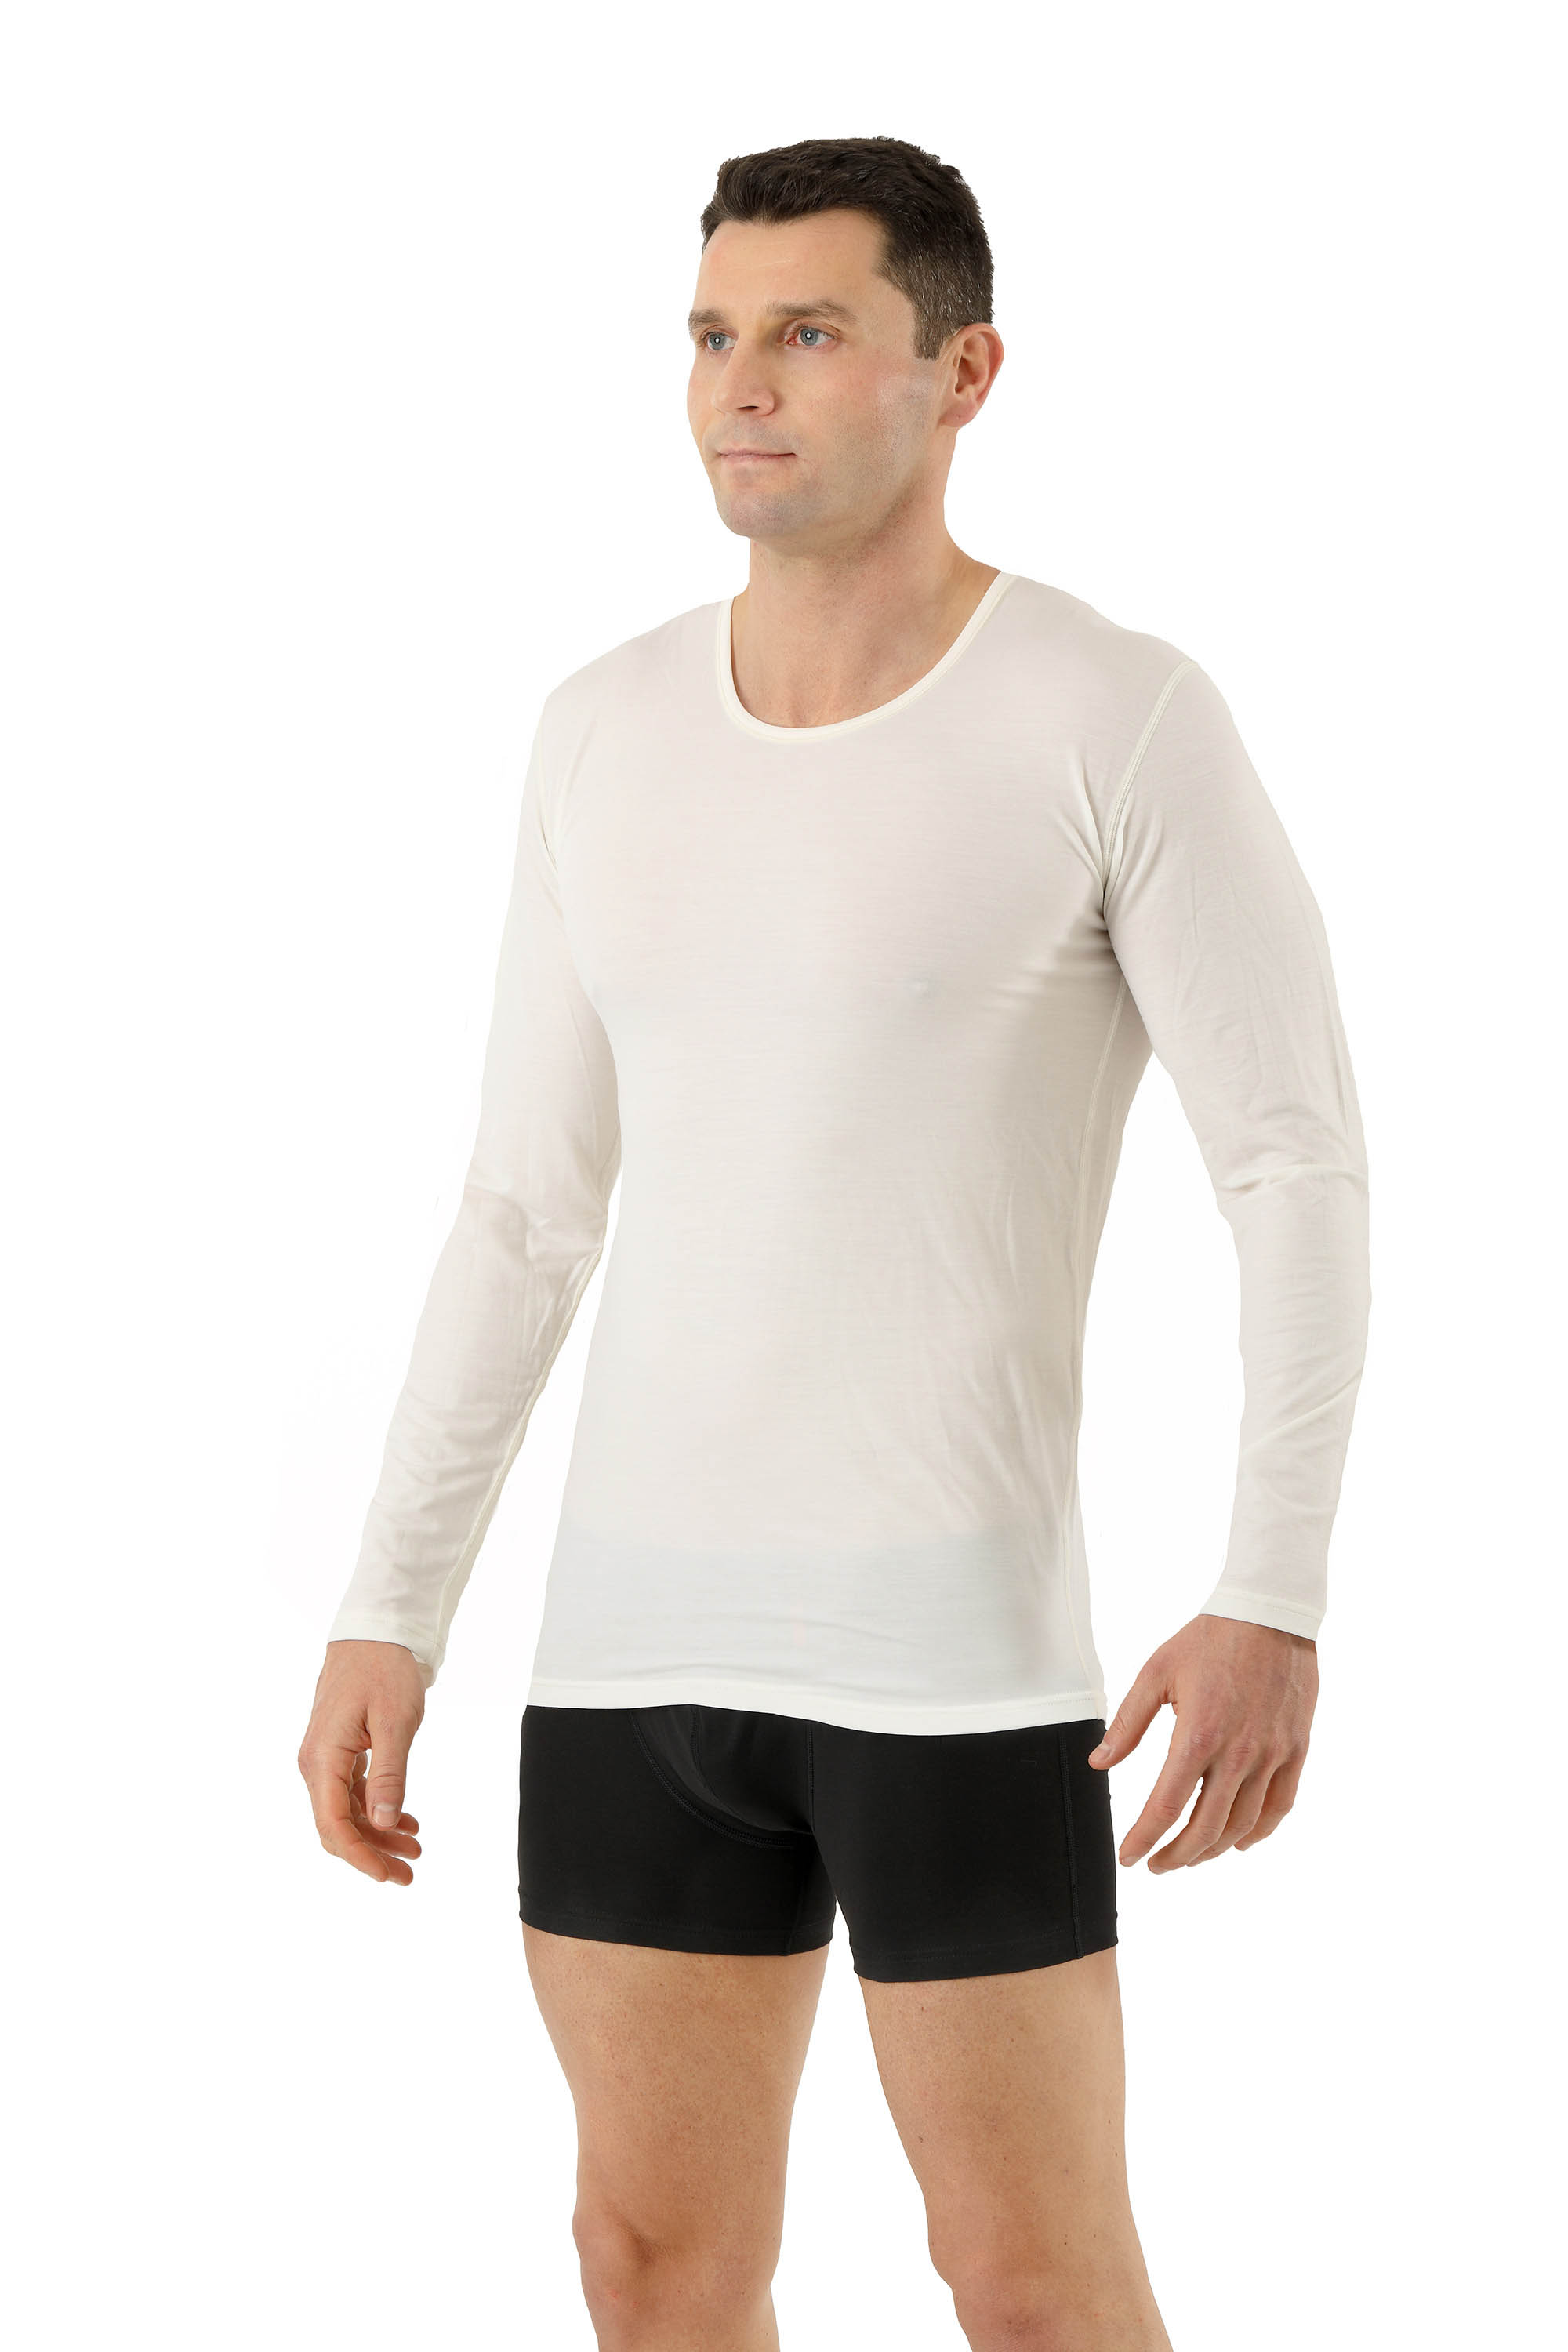 ALBERT KREUZ  Maglietta intima termica transpirante maniche lunghe lana  merino-TENCEL™ Lyocell bianco lana